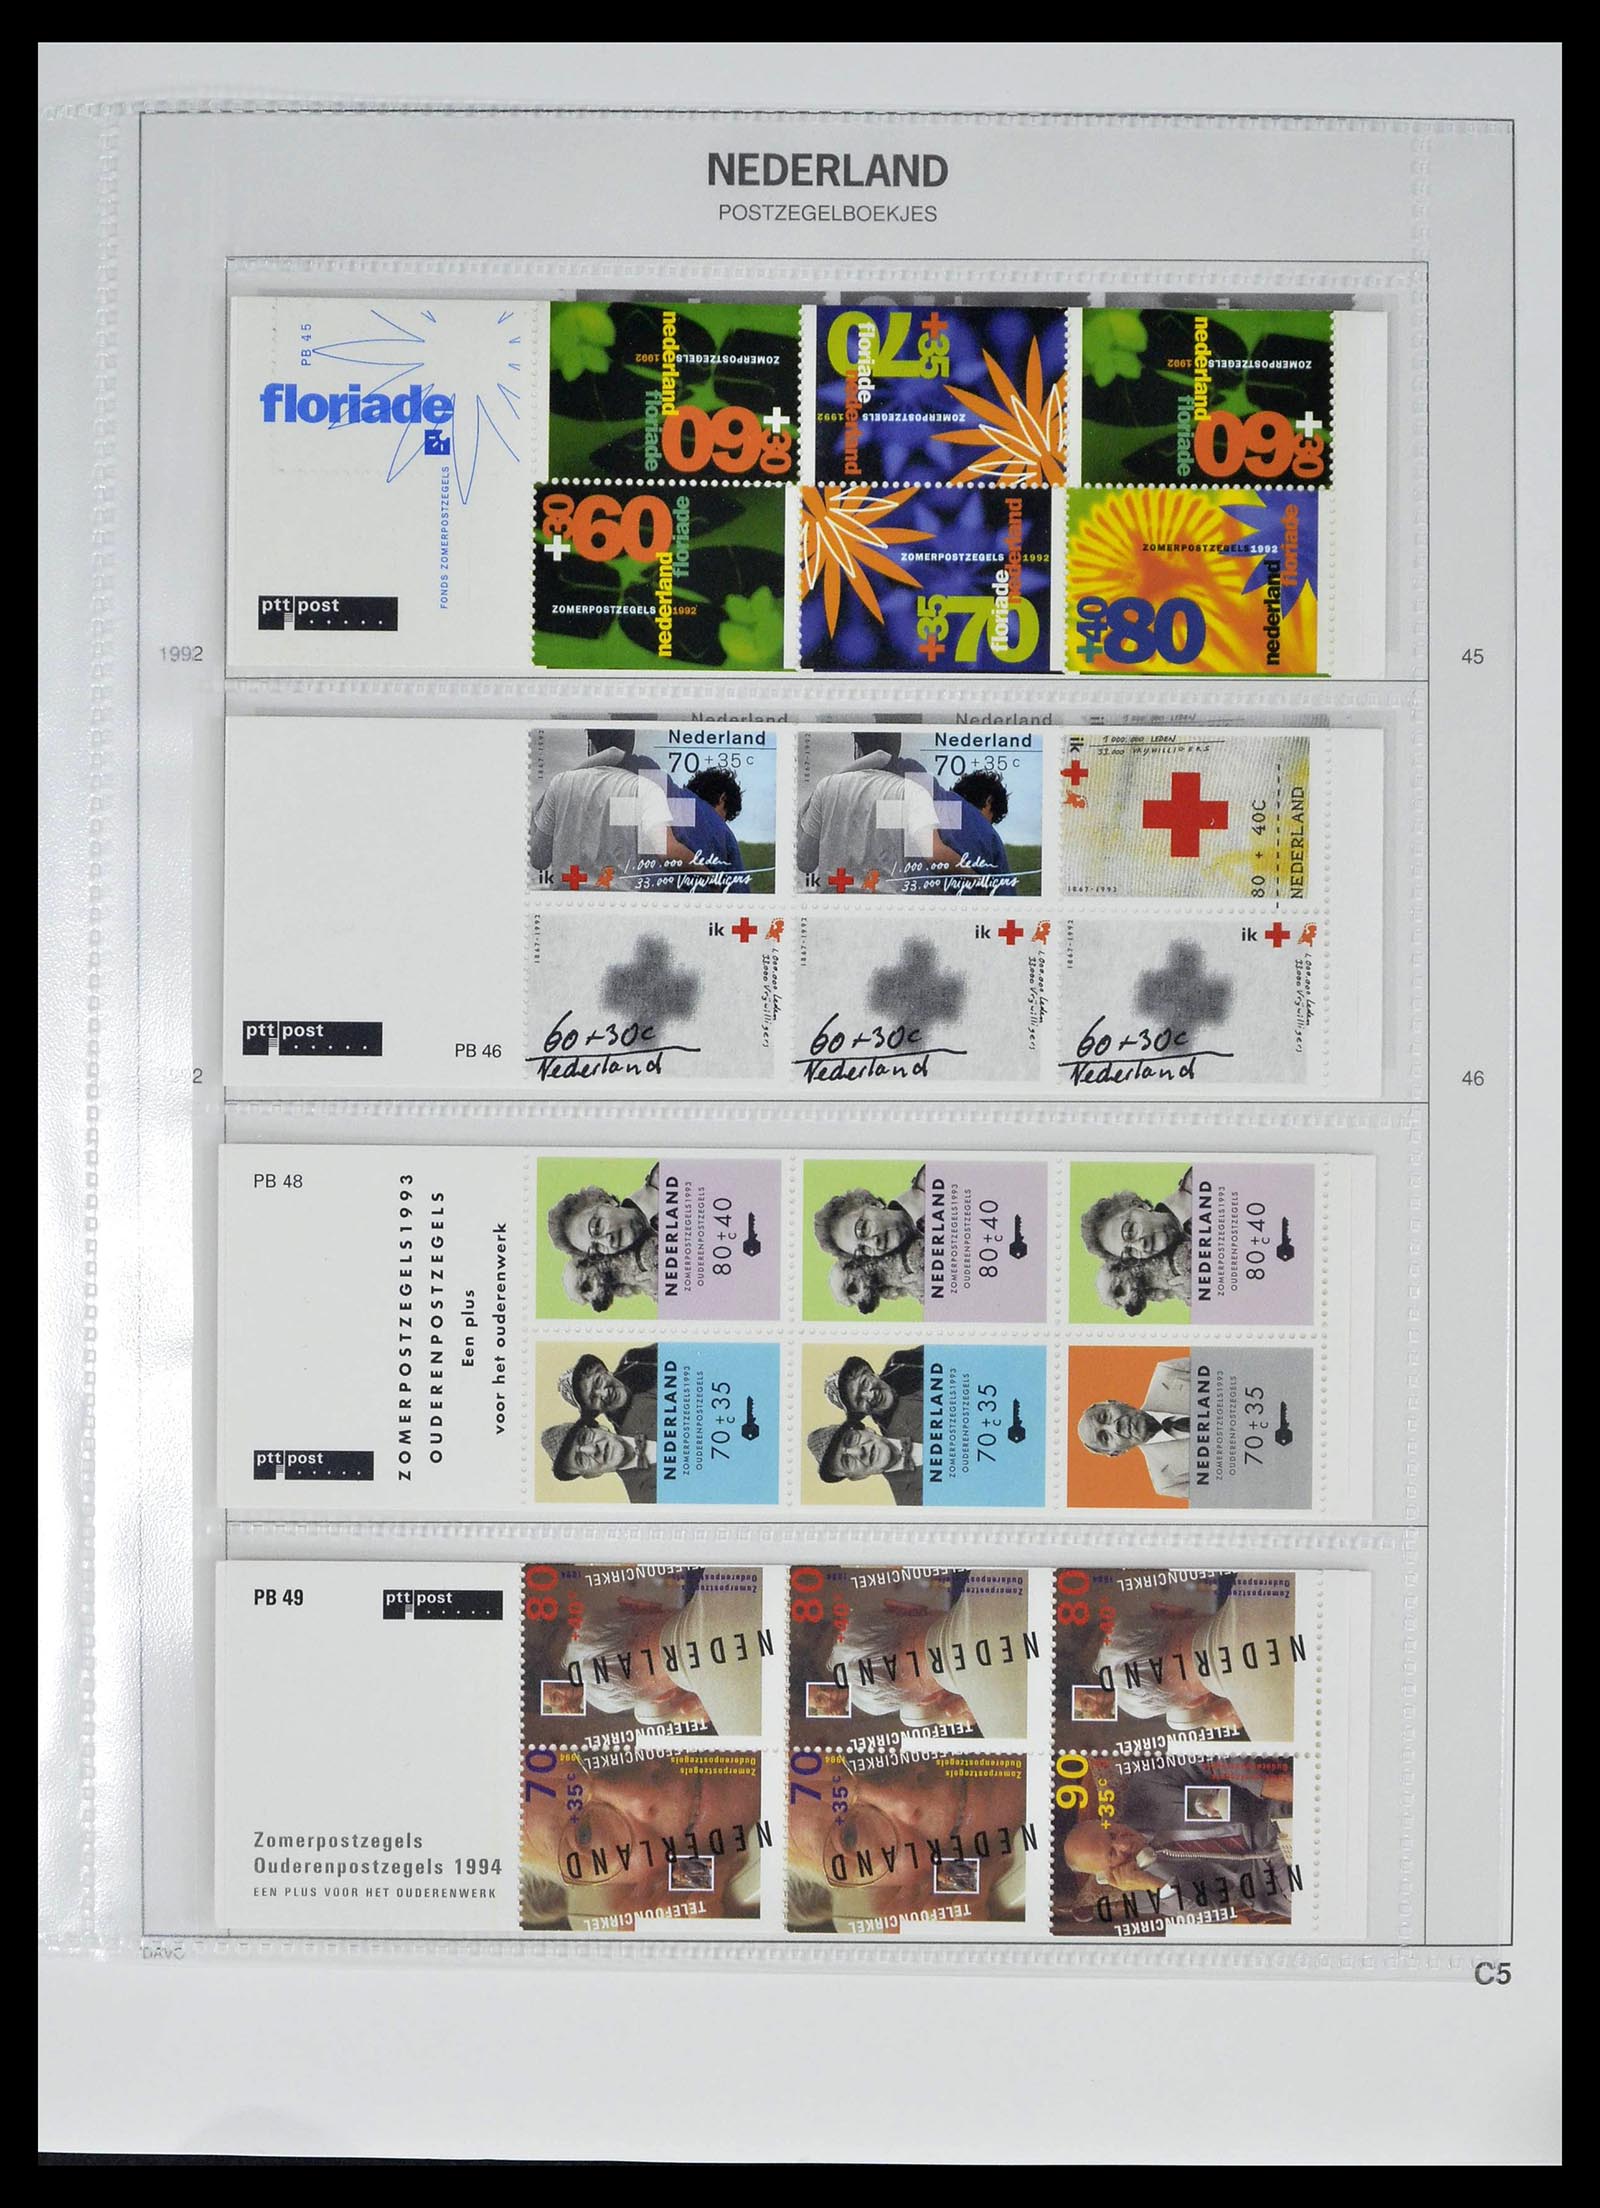 39362 0026 - Stamp collection 39362 Netherlands stamp booklets 1964-2003.